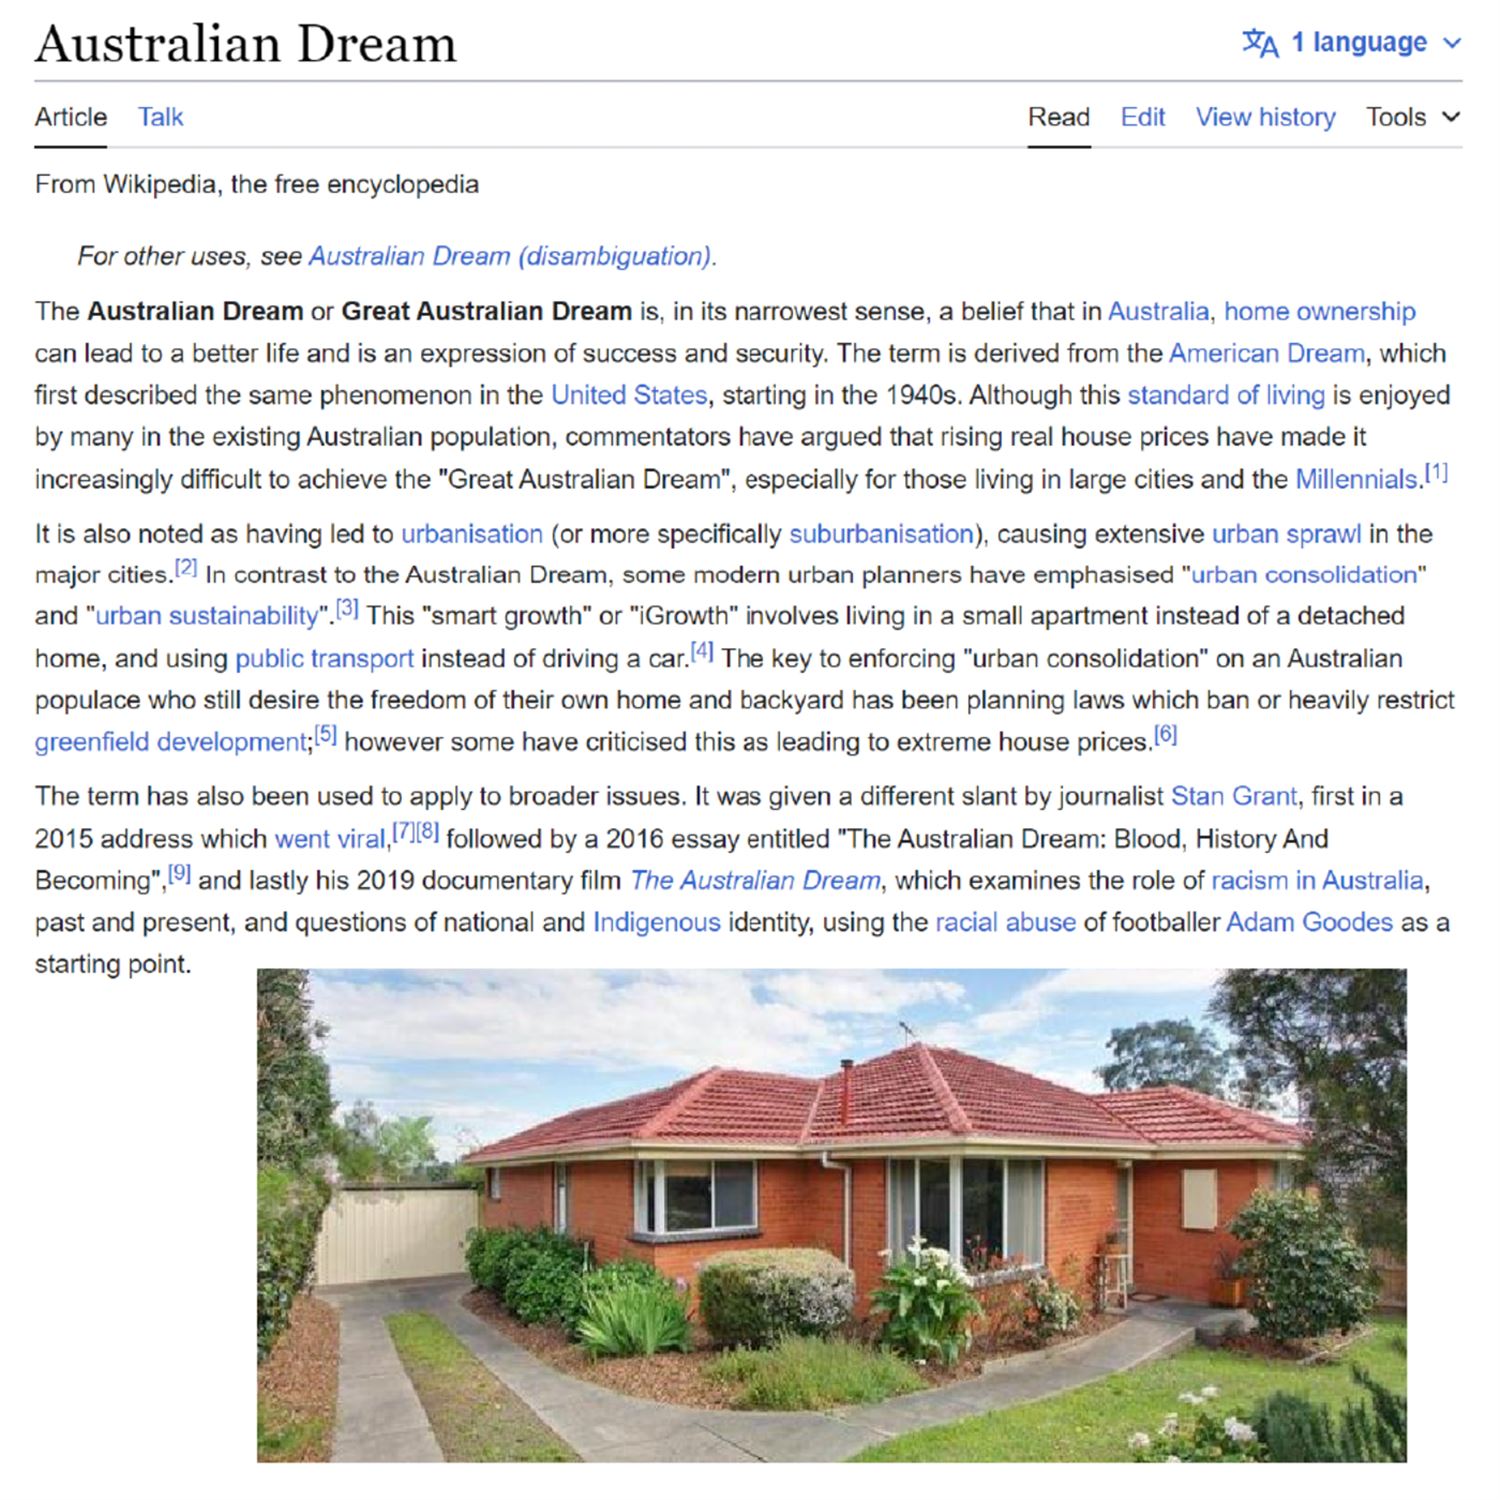 The Aussie dream